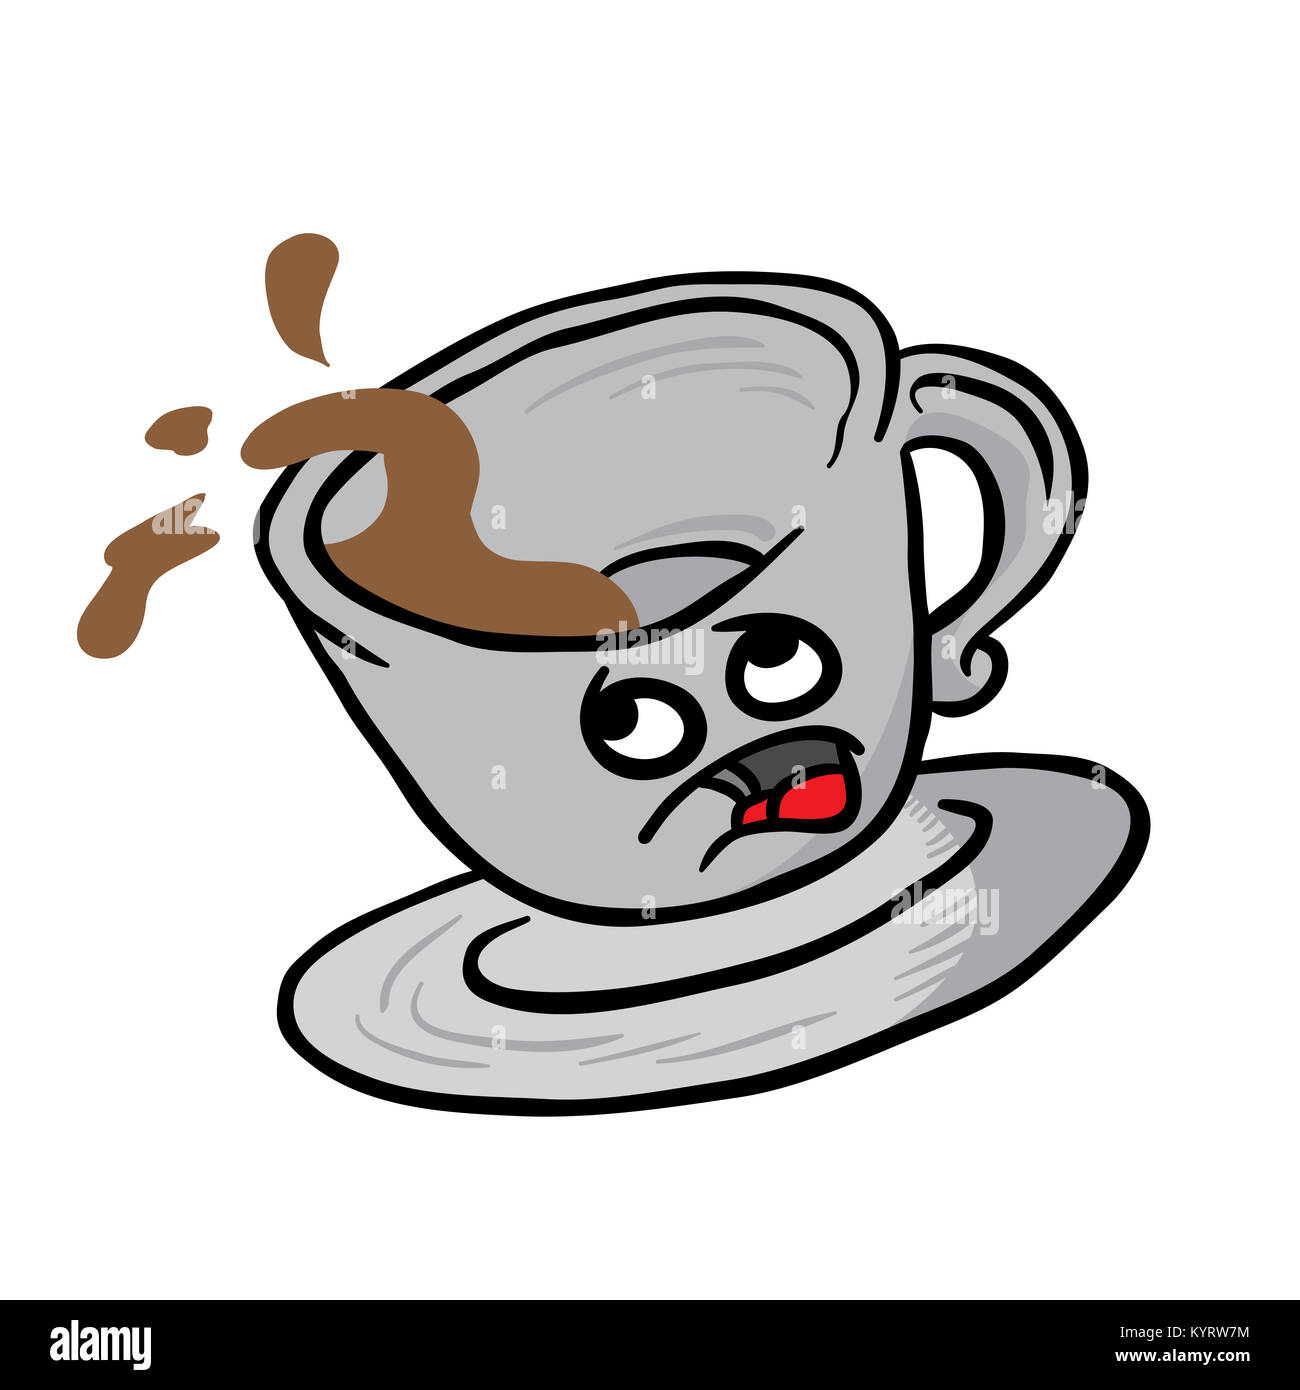 https://c8.alamy.com/comp/KYRW7M/afraid-coffee-cup-spill-cartoon-illustration-KYRW7M.jpg